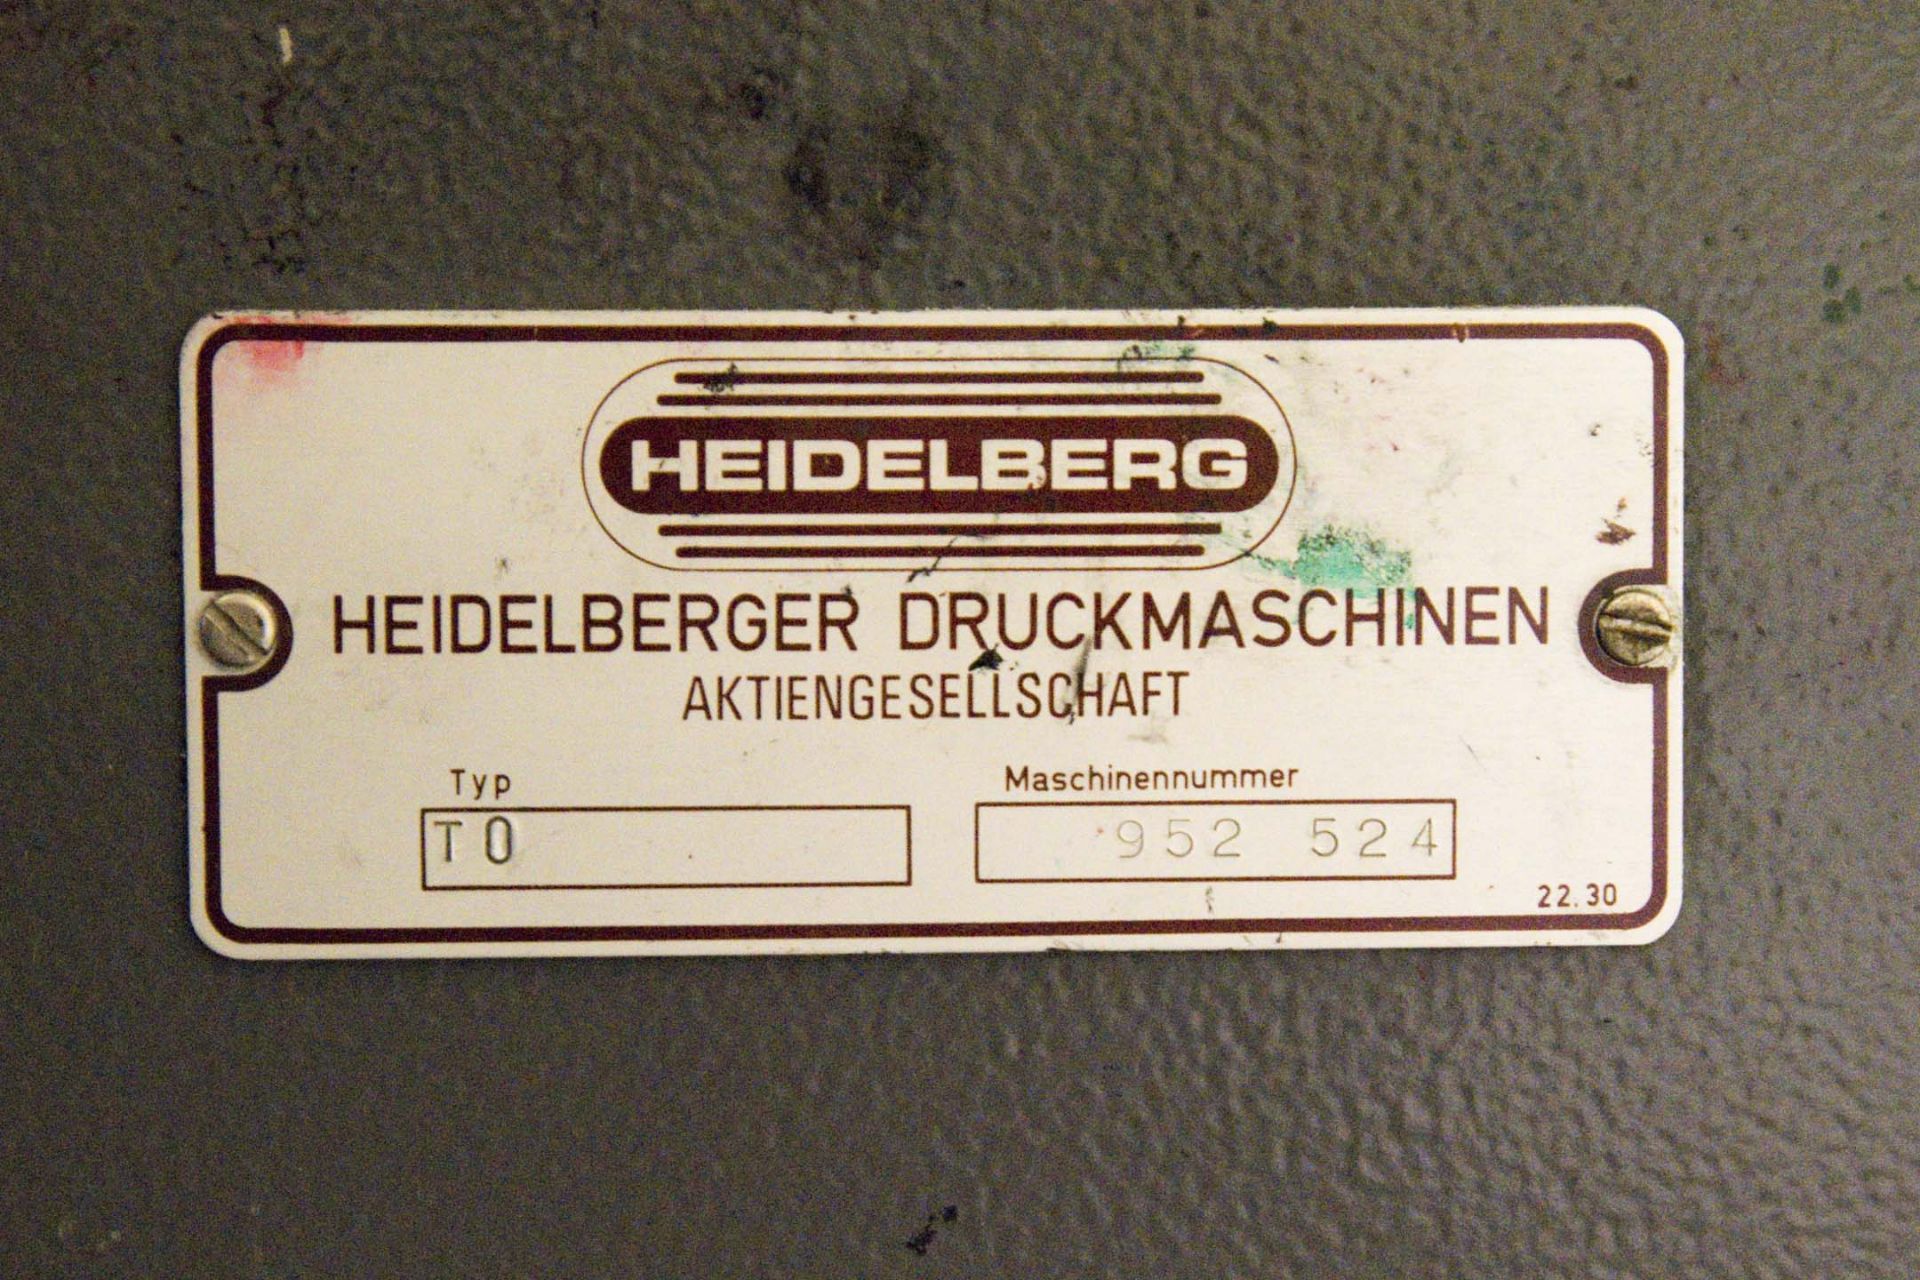 Heidelberg Tok (28cm x 39cm). 43 million impressions. Serial No. 952524. - Image 3 of 3